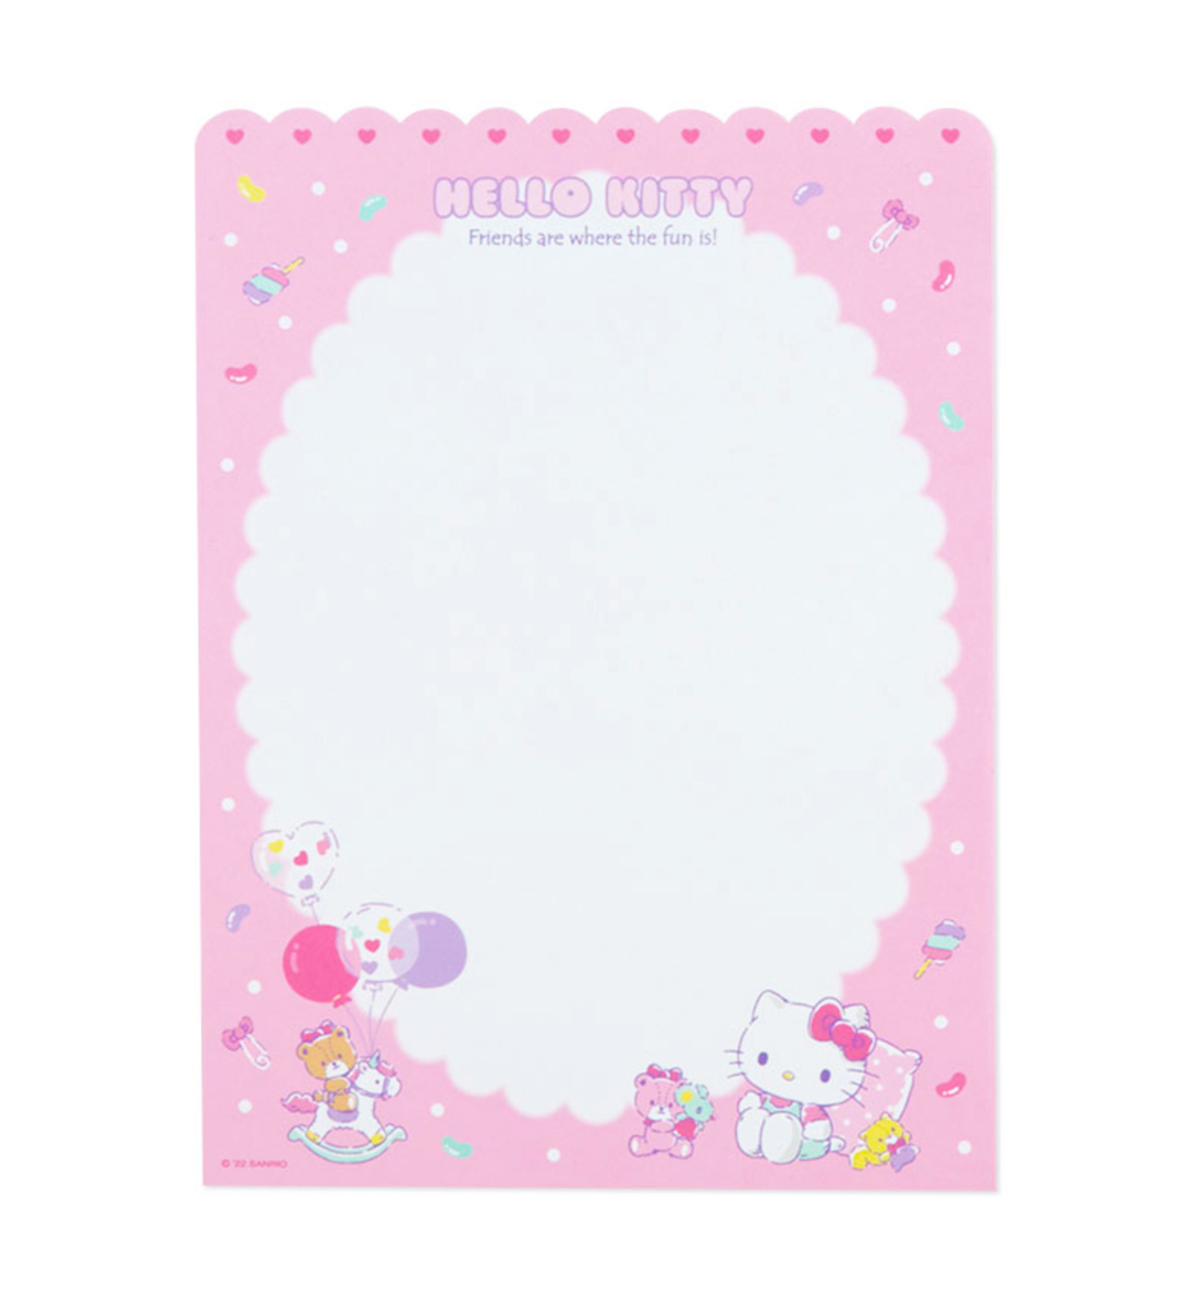 Sanrio Hello Kitty Letter Set [Variety]